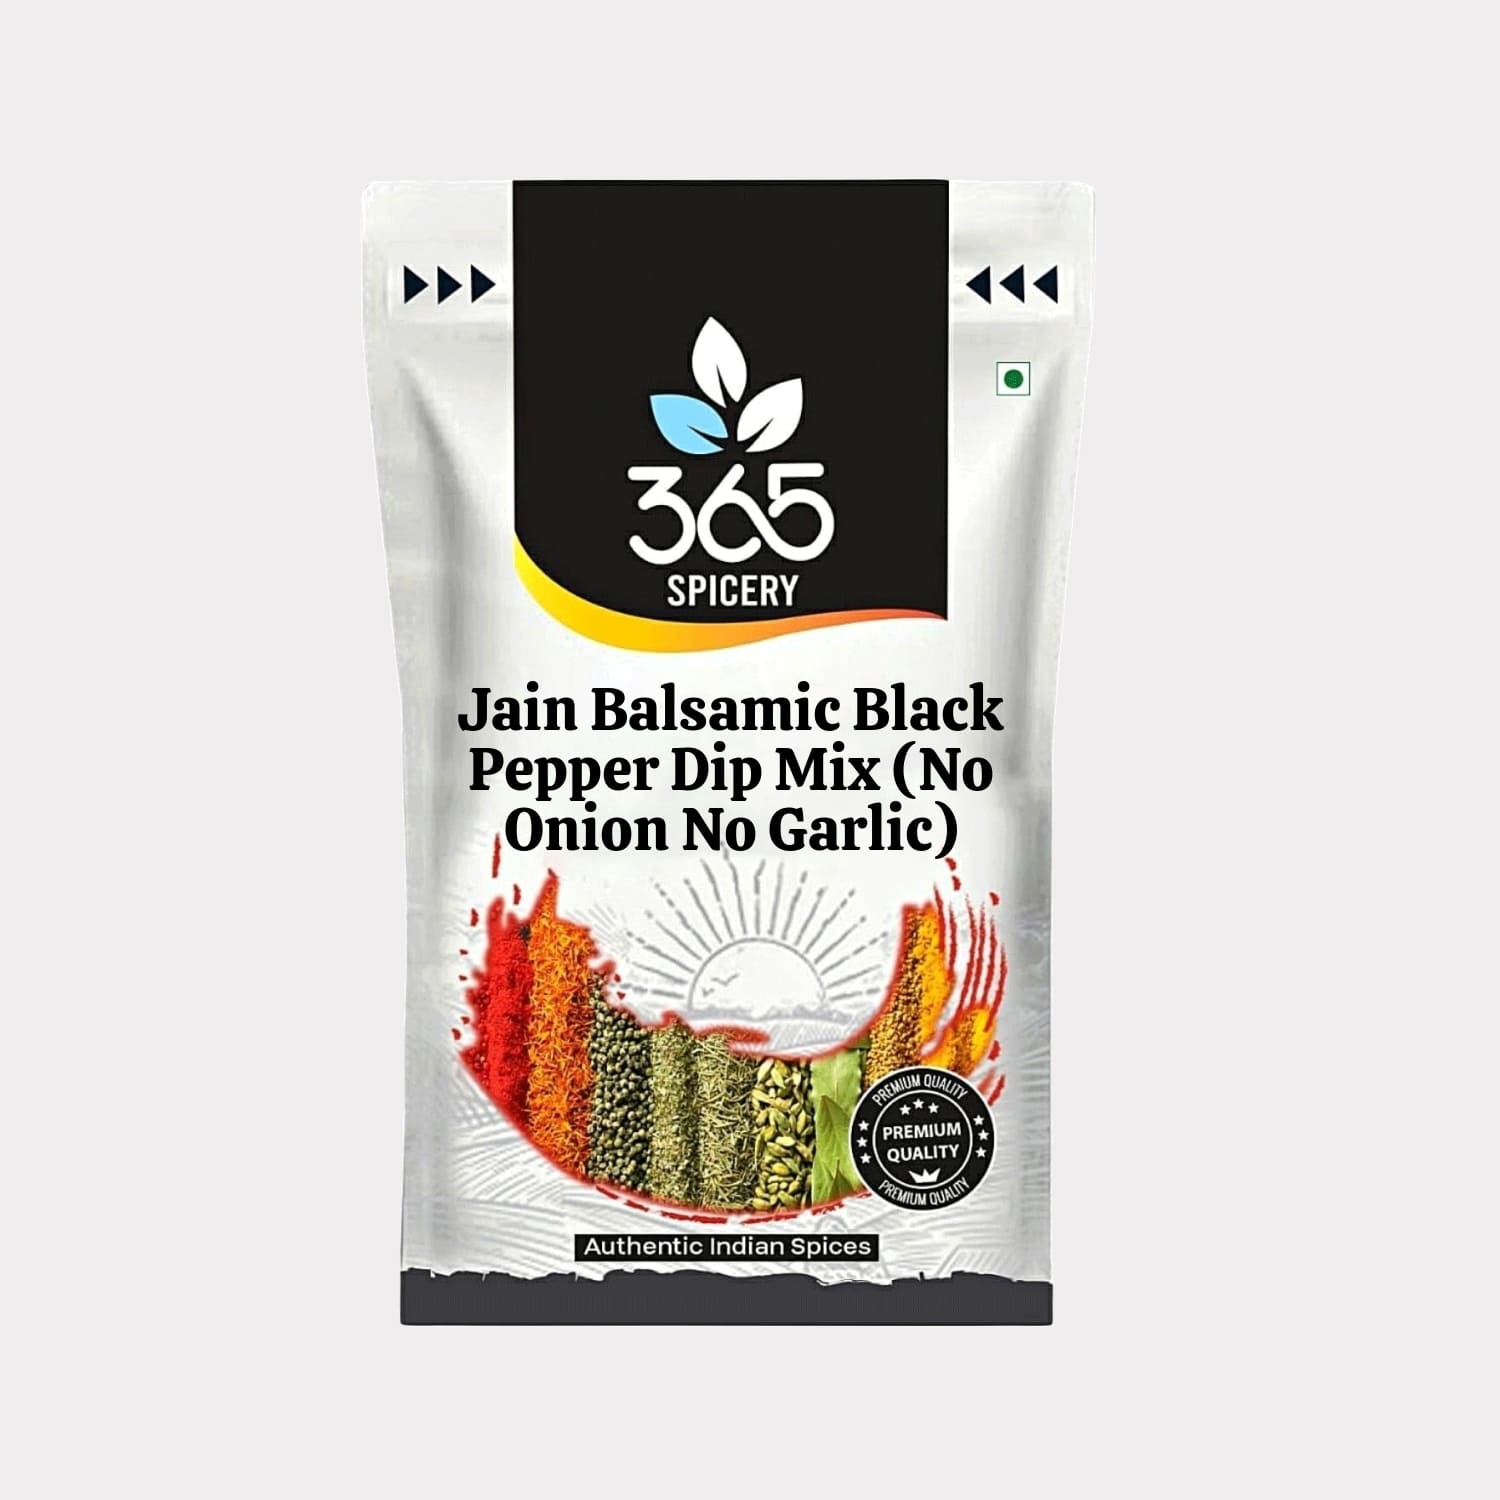 Jain Balsamic Black Pepper Dip Mix (No Onion No Garlic)